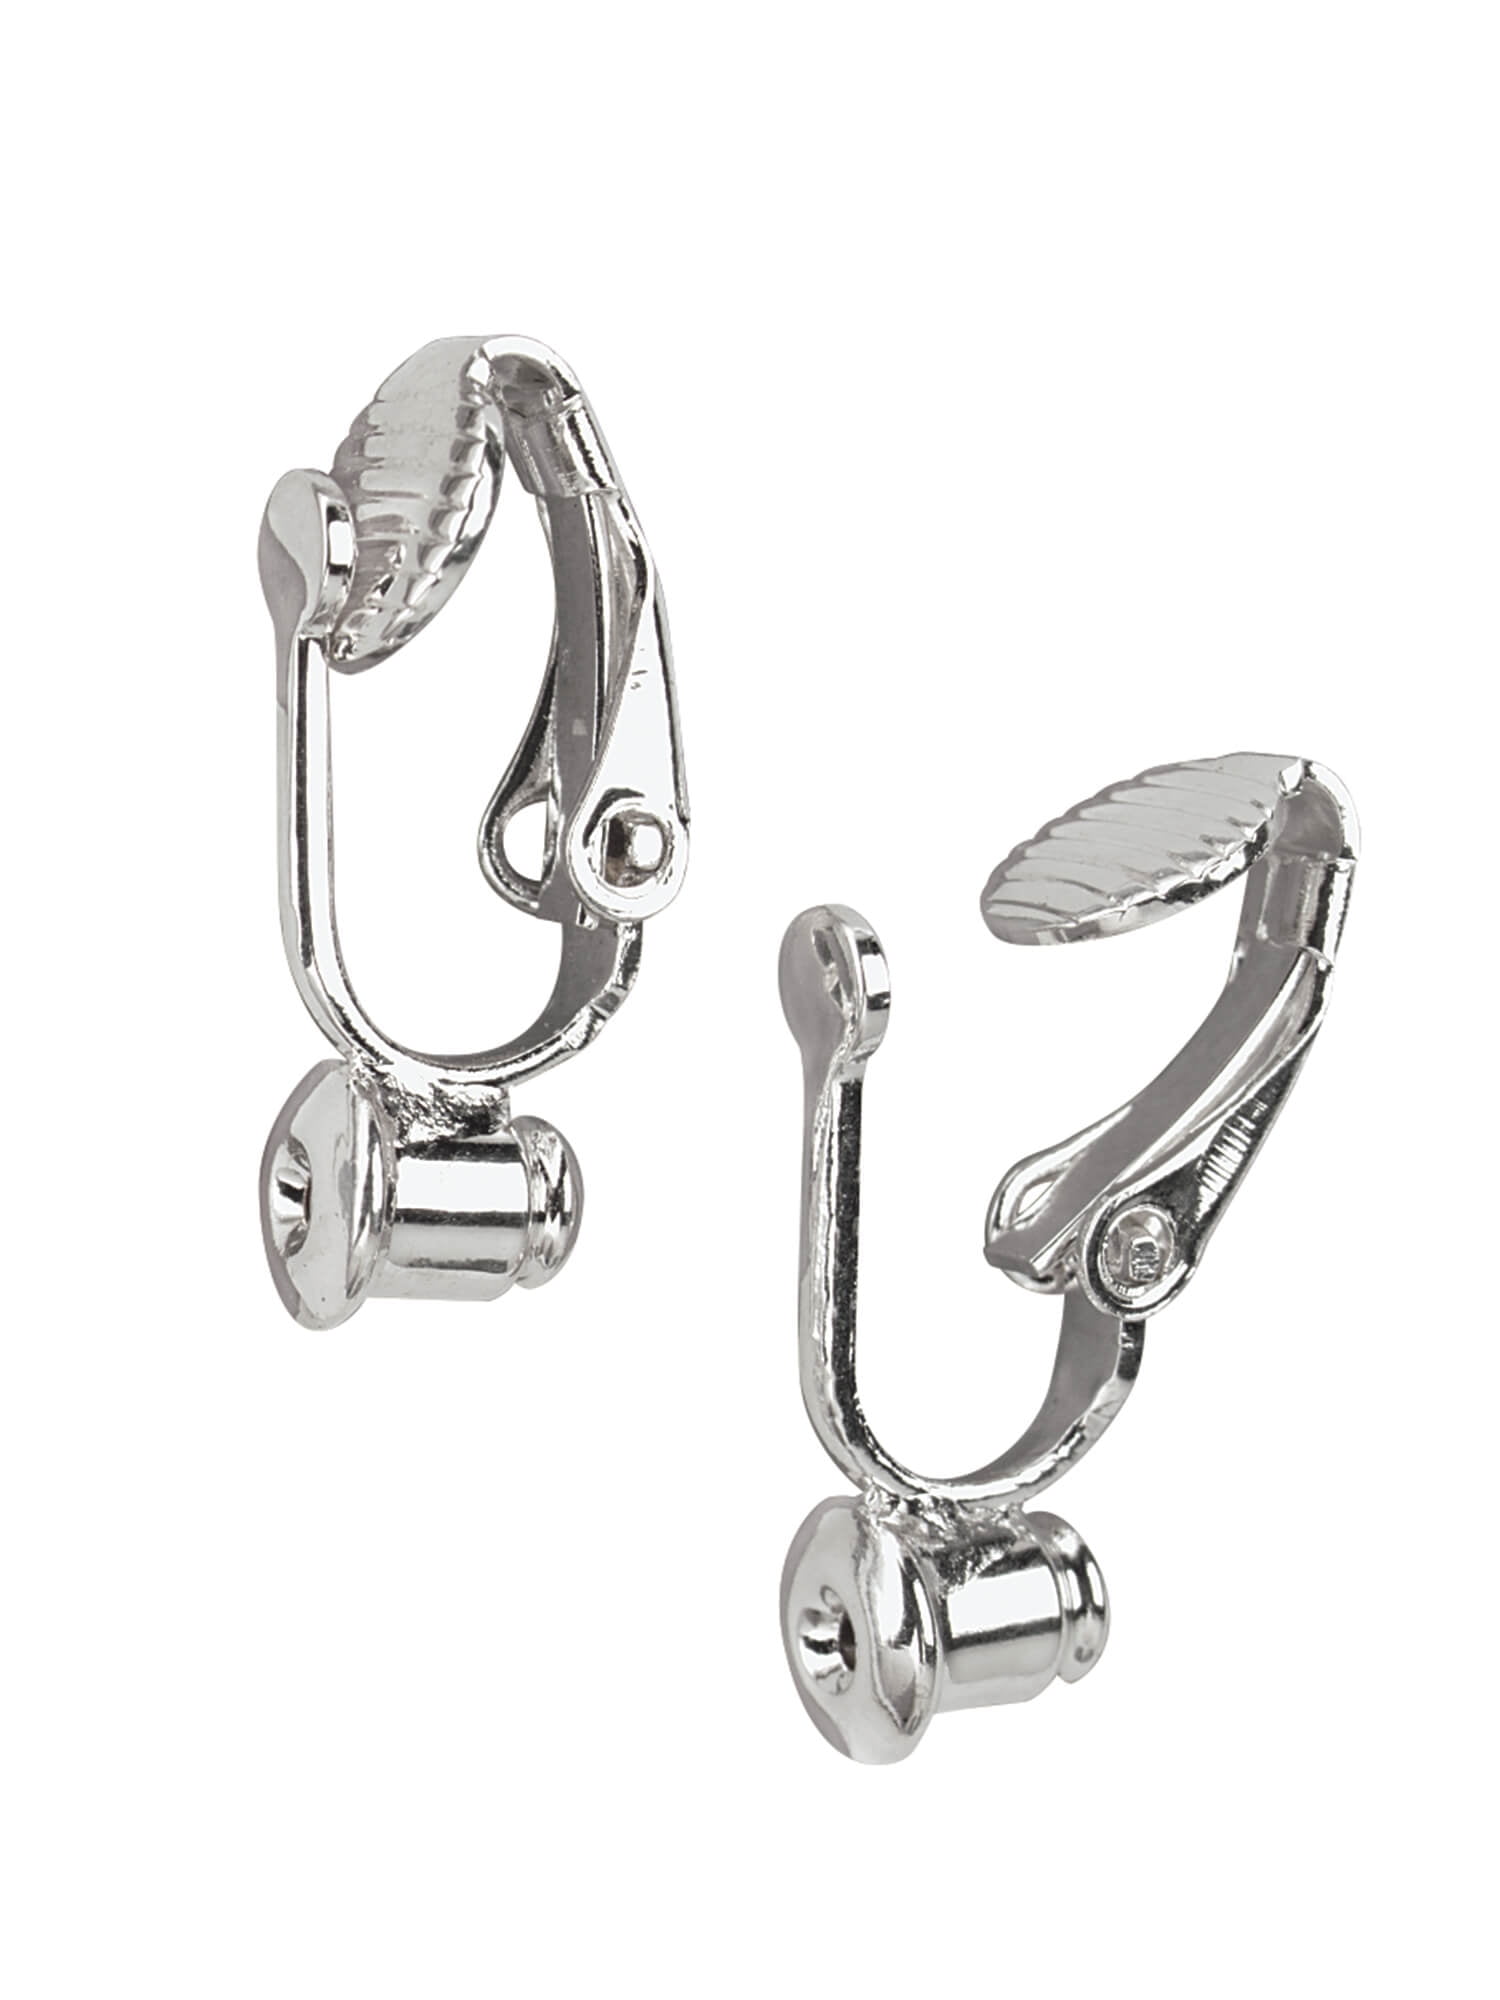 Unisex Earrings In Drawstring bag Aluminum Chain Links Dangle Earrings Black and Silver Twisted Jump Ring Earrings